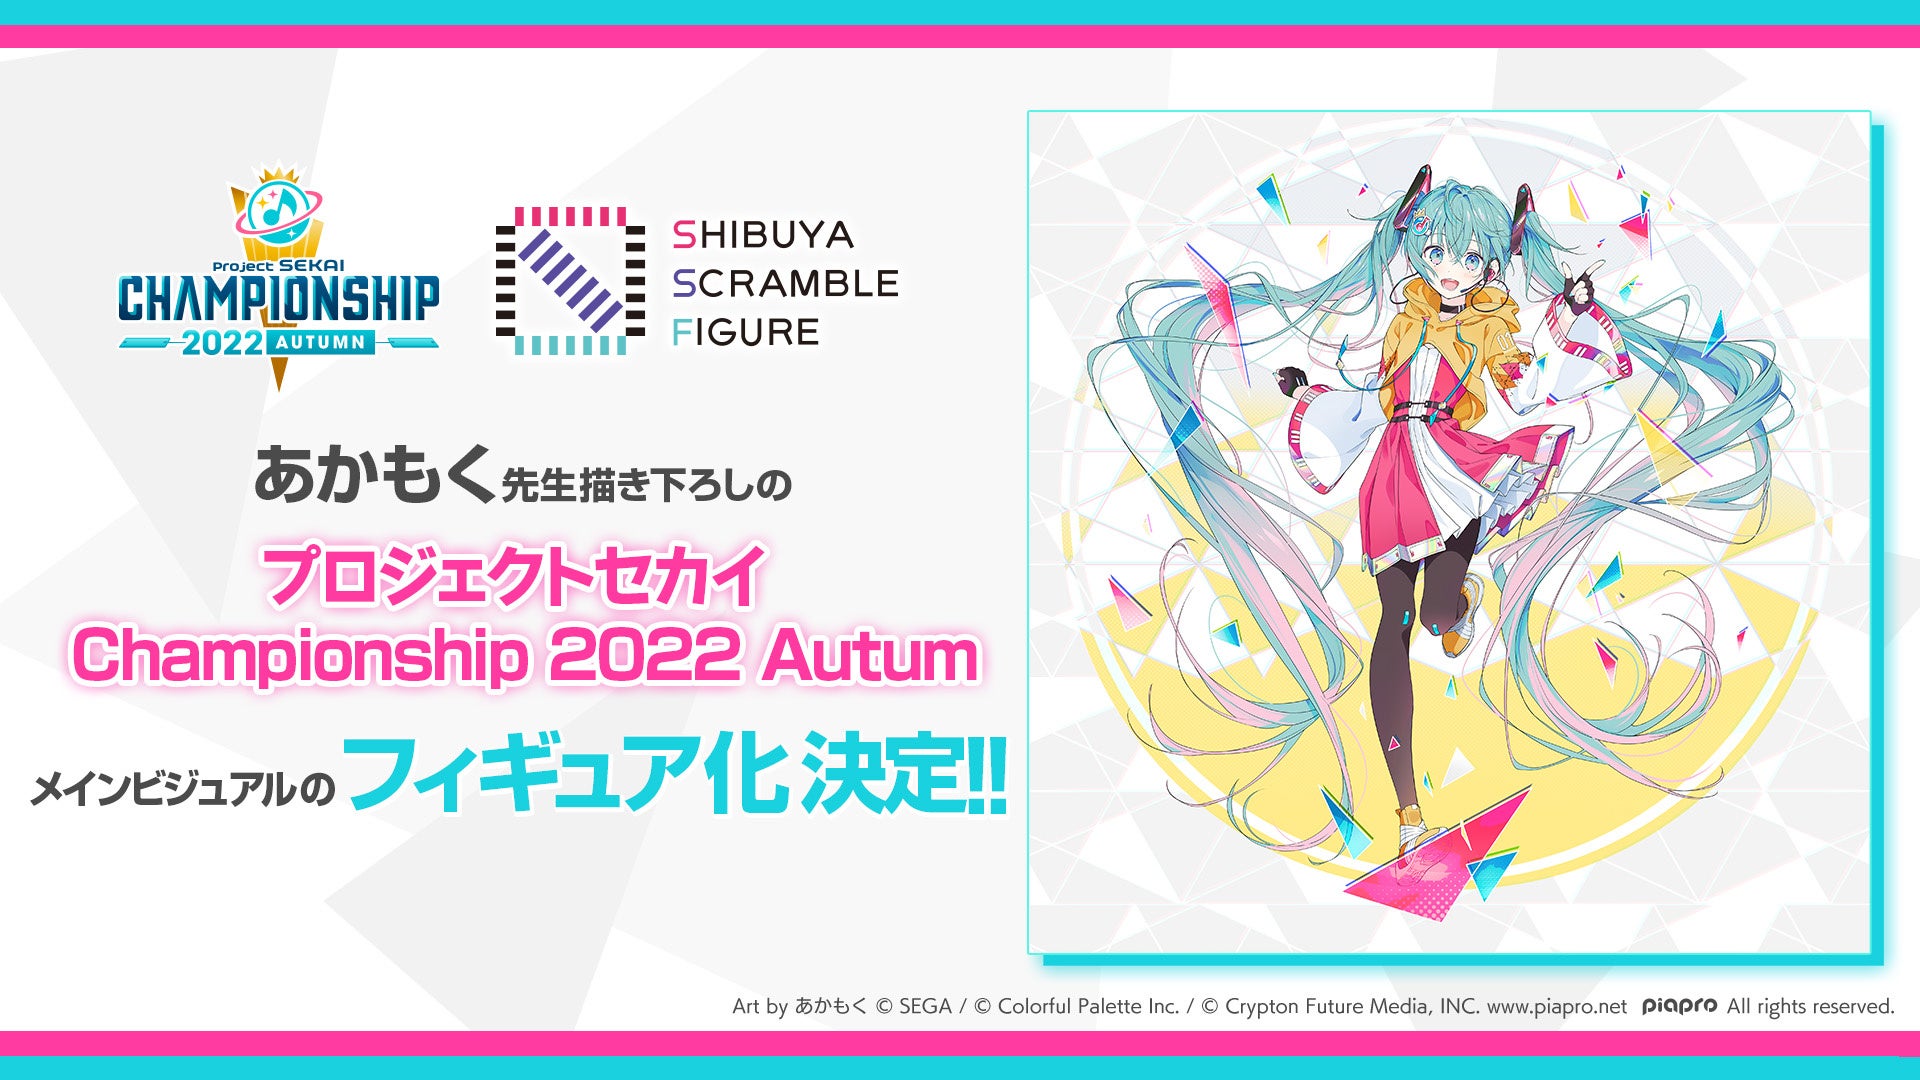 SHIBUYA SCRAMBLE FIGURE、『プロジェクトセカイ Championship 2022 Autumn』メインビジュアルの初音ミクの1/7スケールフィギュア化が決定！